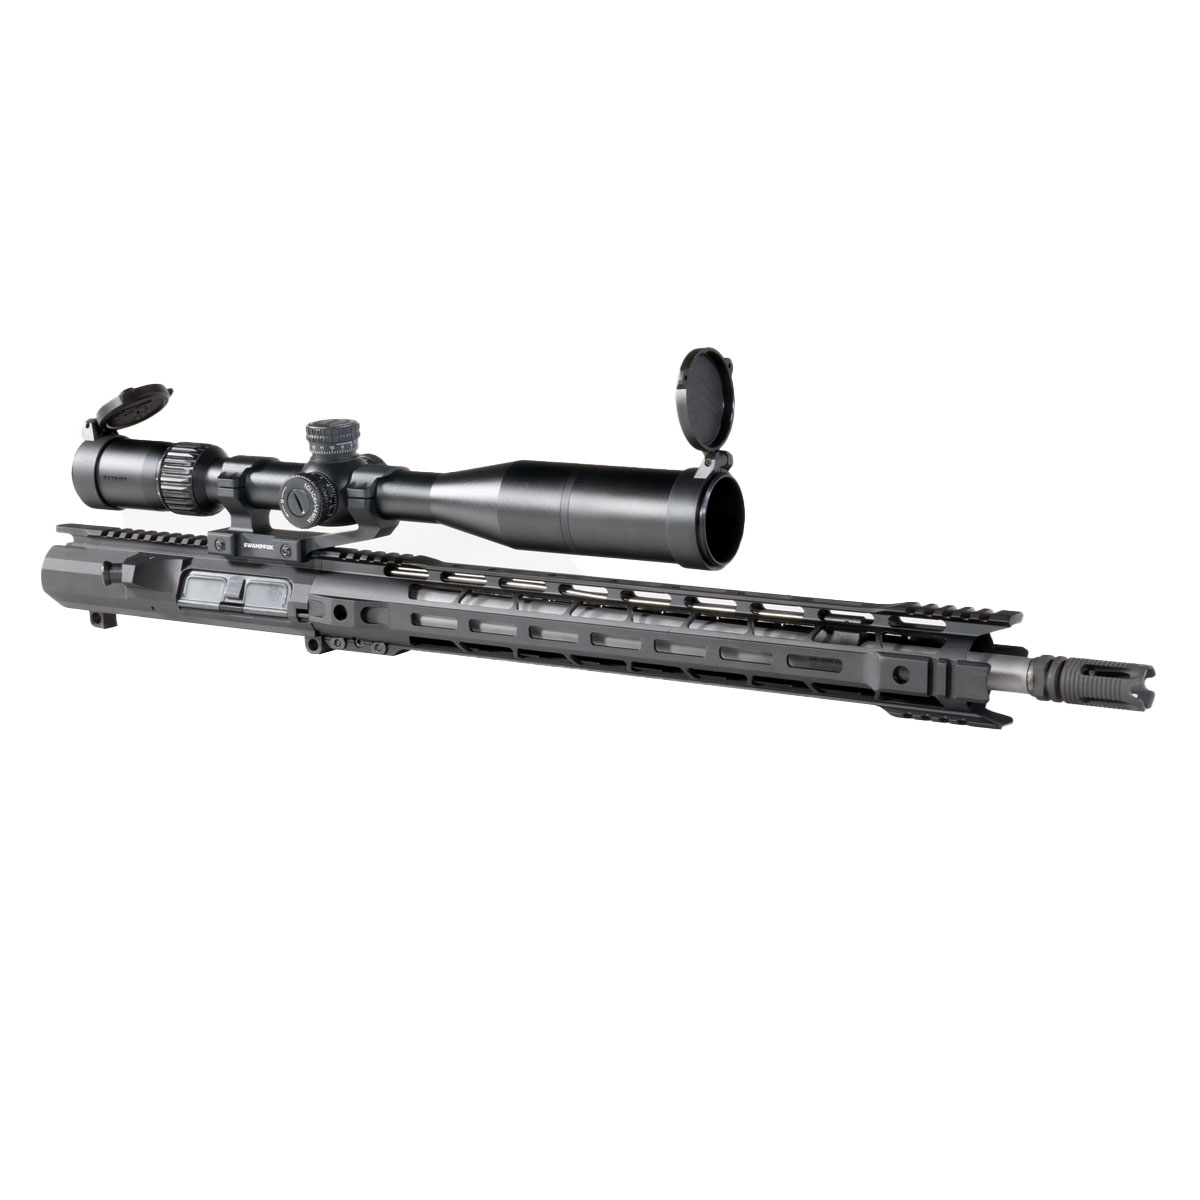 DD 'Negotiator' 18-inch LR-308 .308 Win Stainless Rifle Upper Build Kit